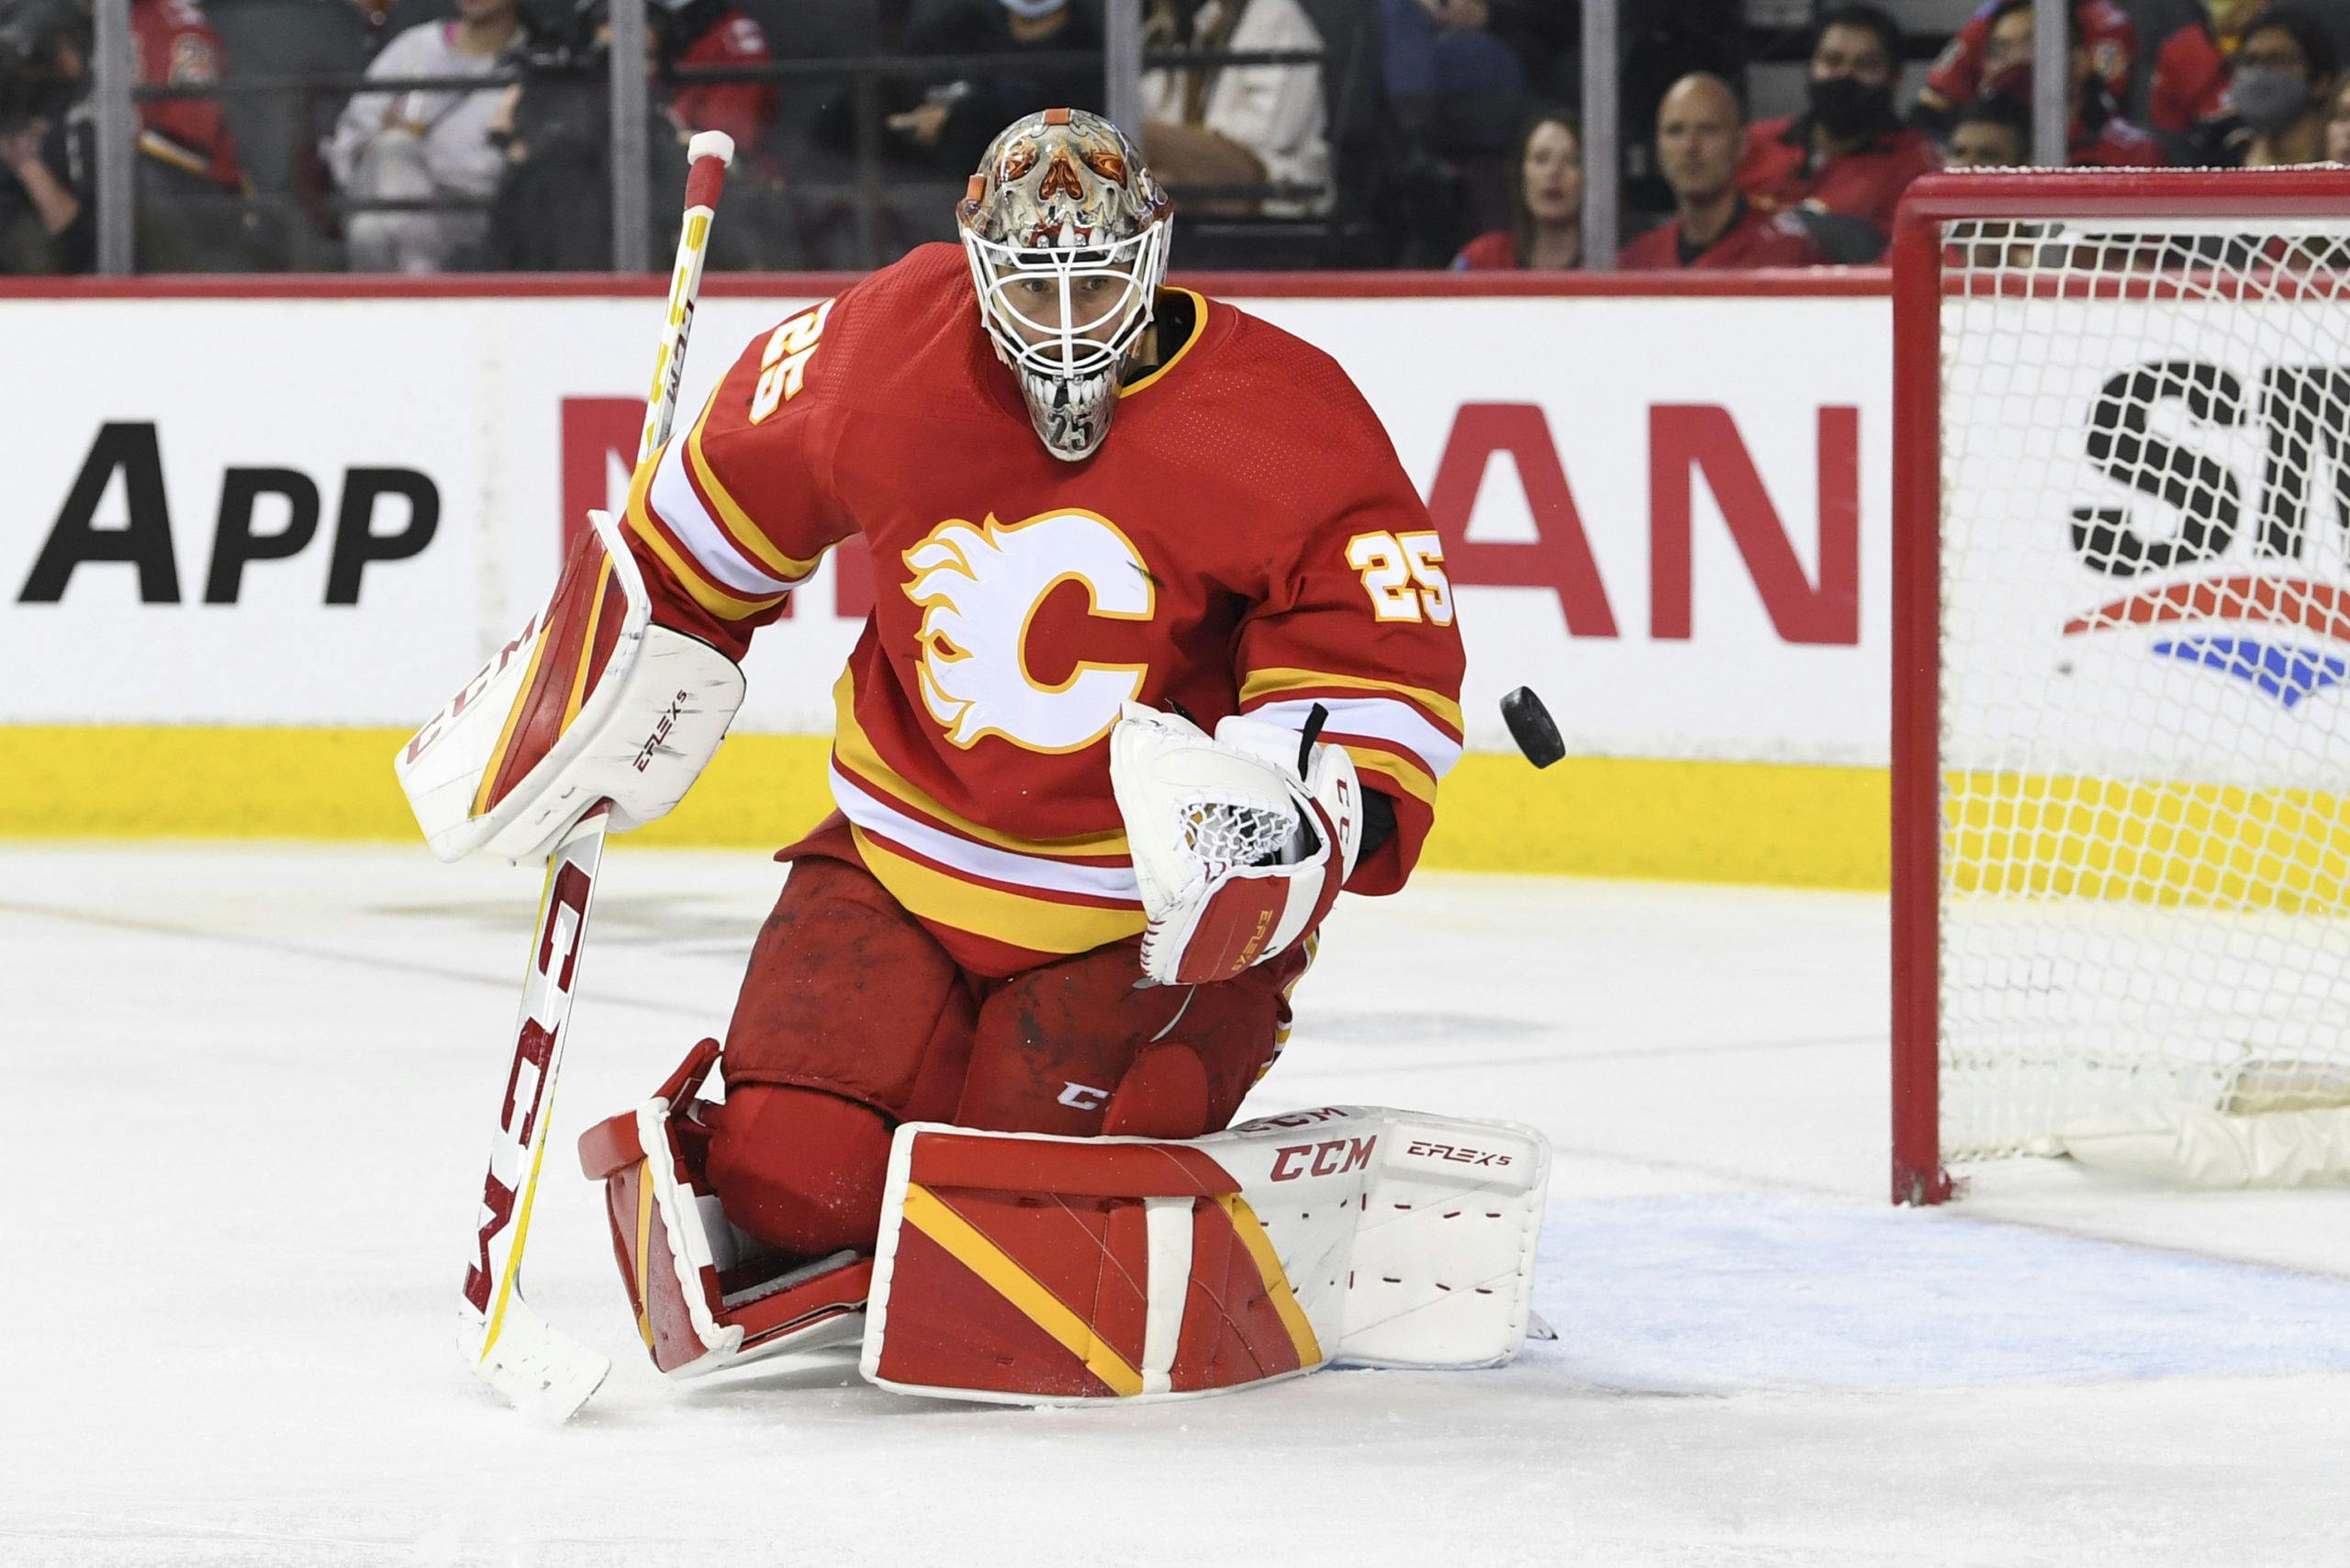 Jacob Markstrom's 32-save shutout lifts Calgary Flames over